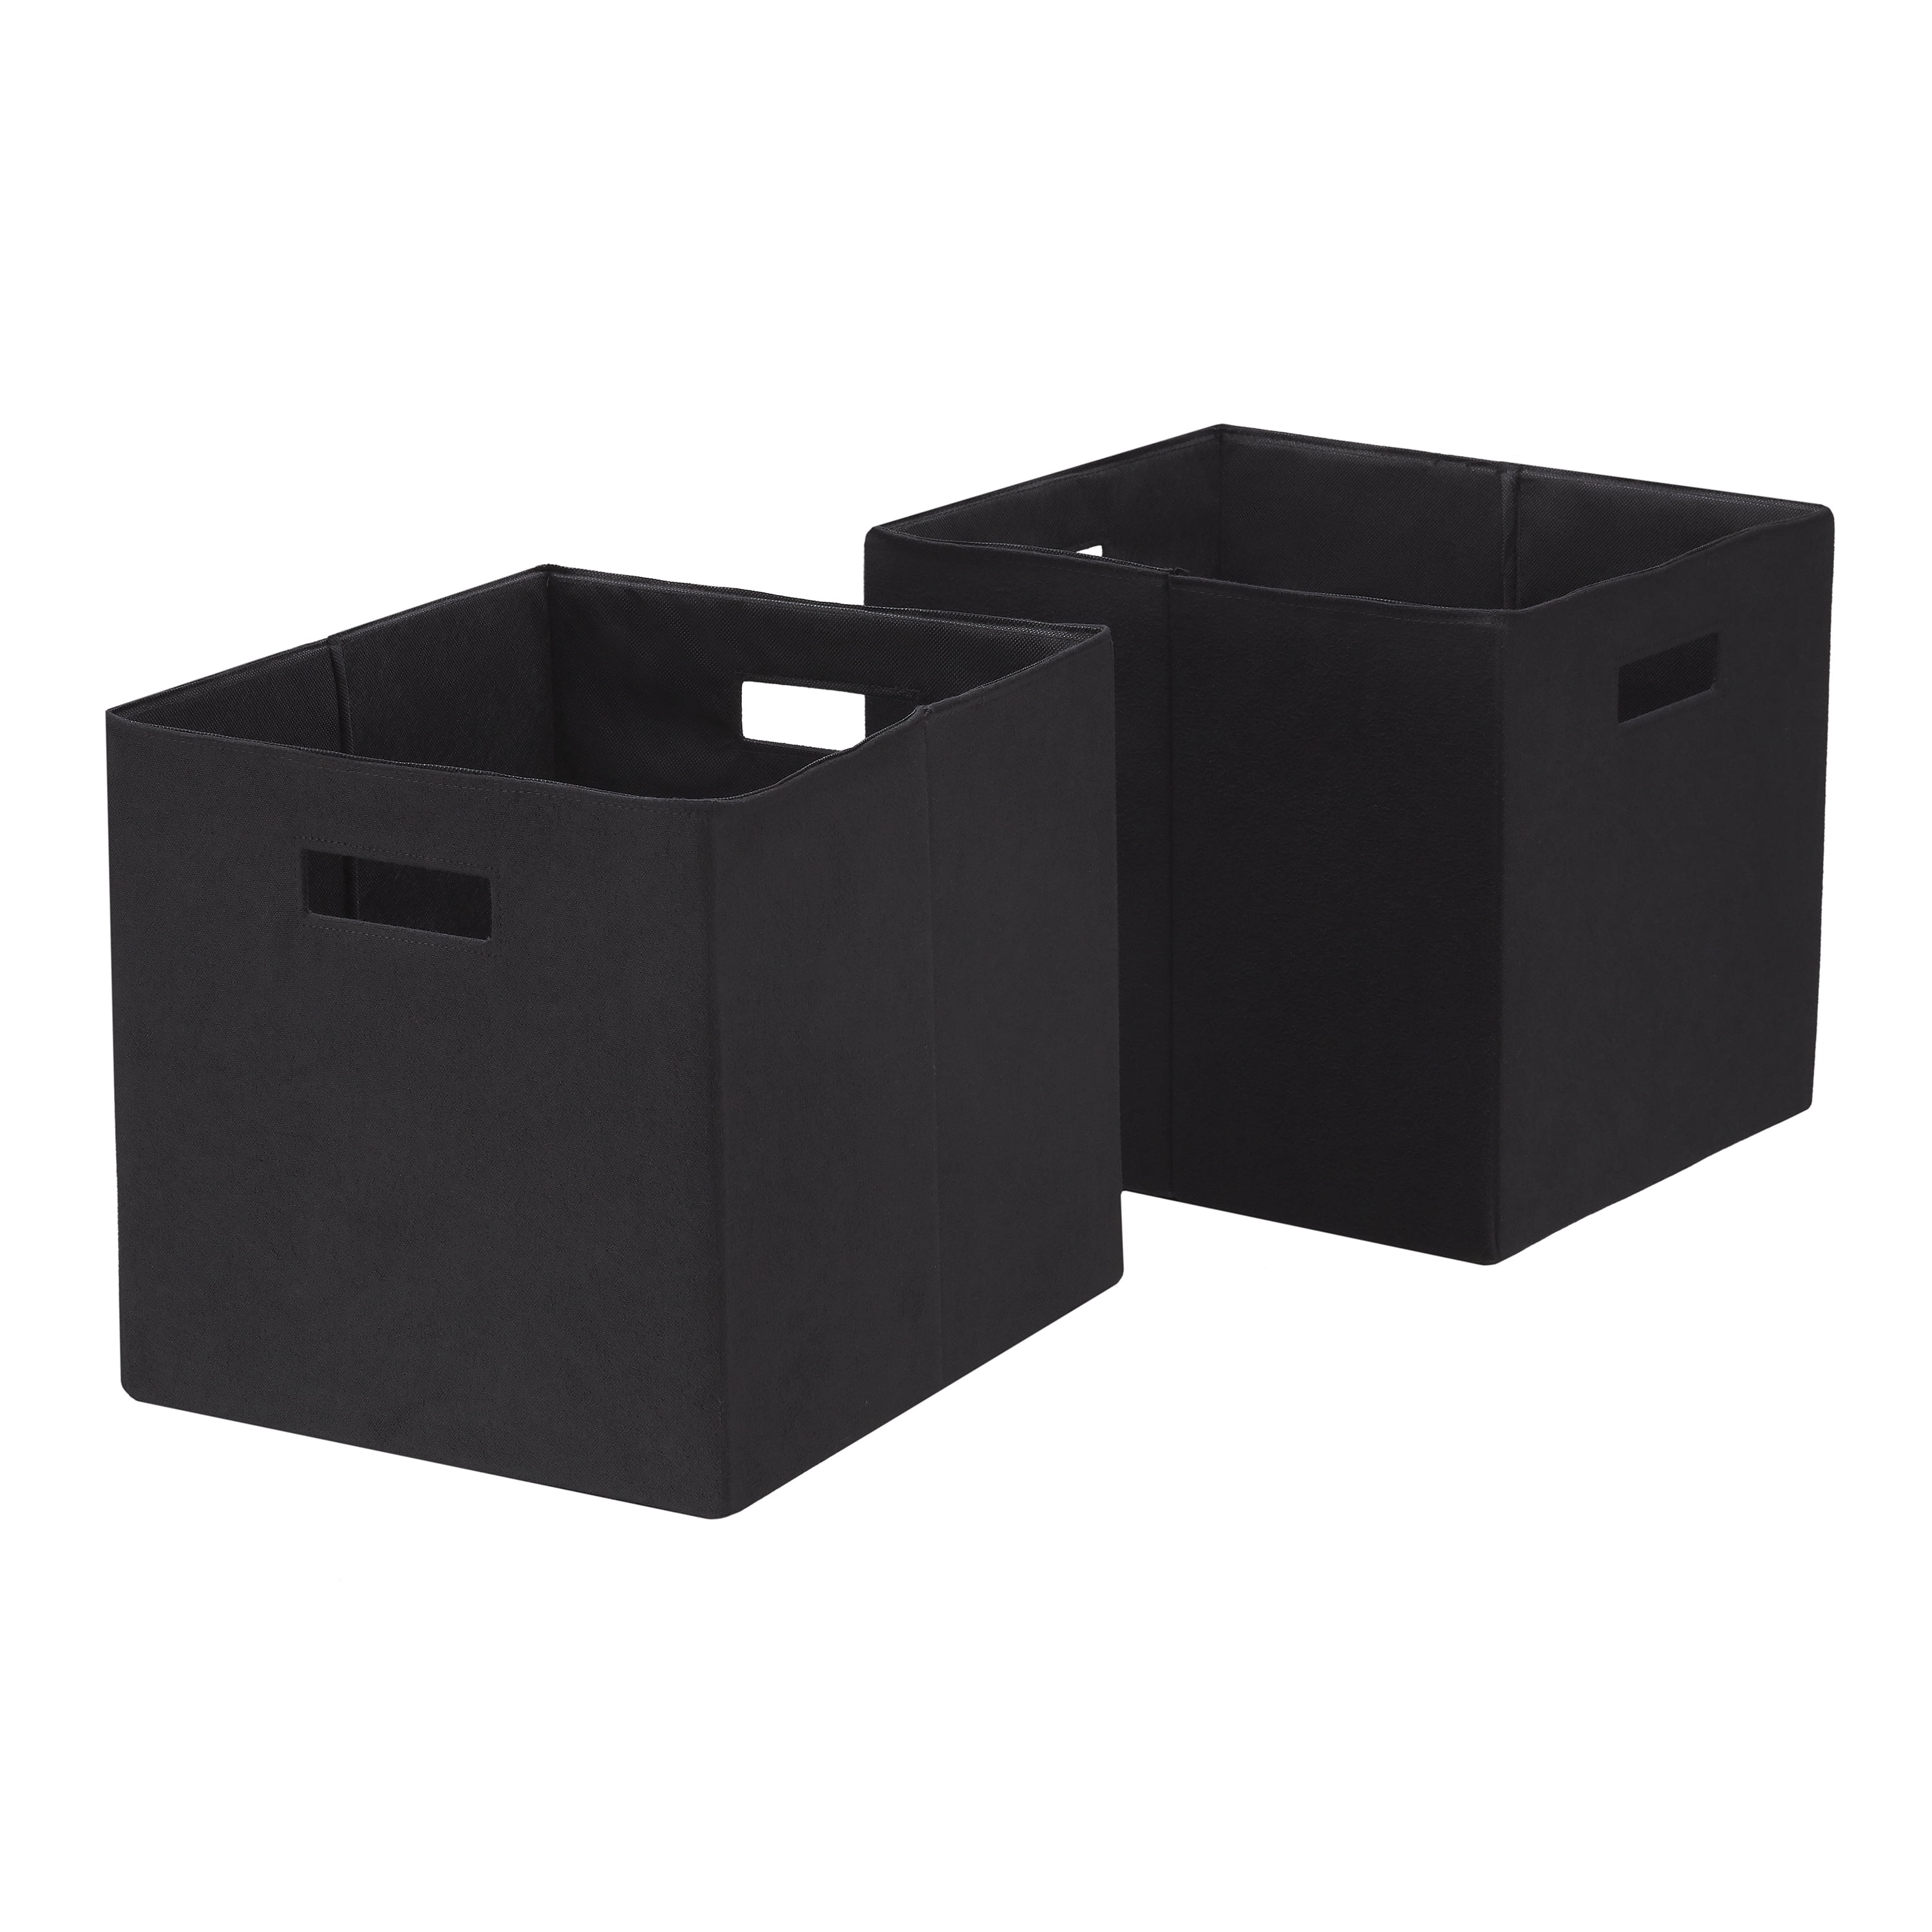 Fabric Storage Bins Baskets Foldable Cloth Storage Cubes Organizers for Closet - Black - 13x13x13